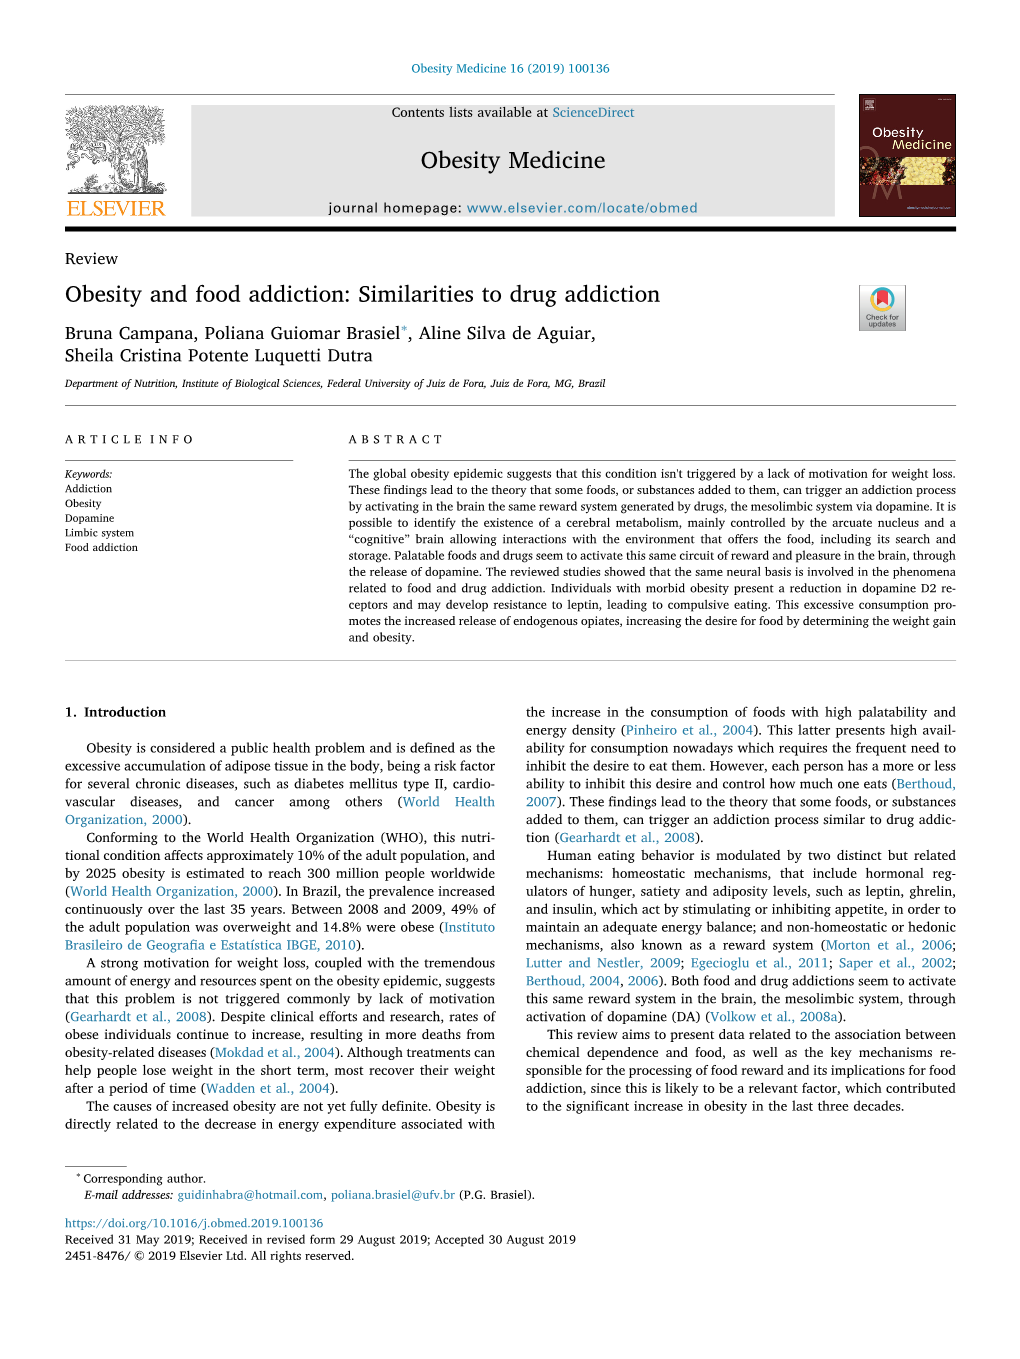 Obesity and Food Addiction Similarities to Drug Addiction